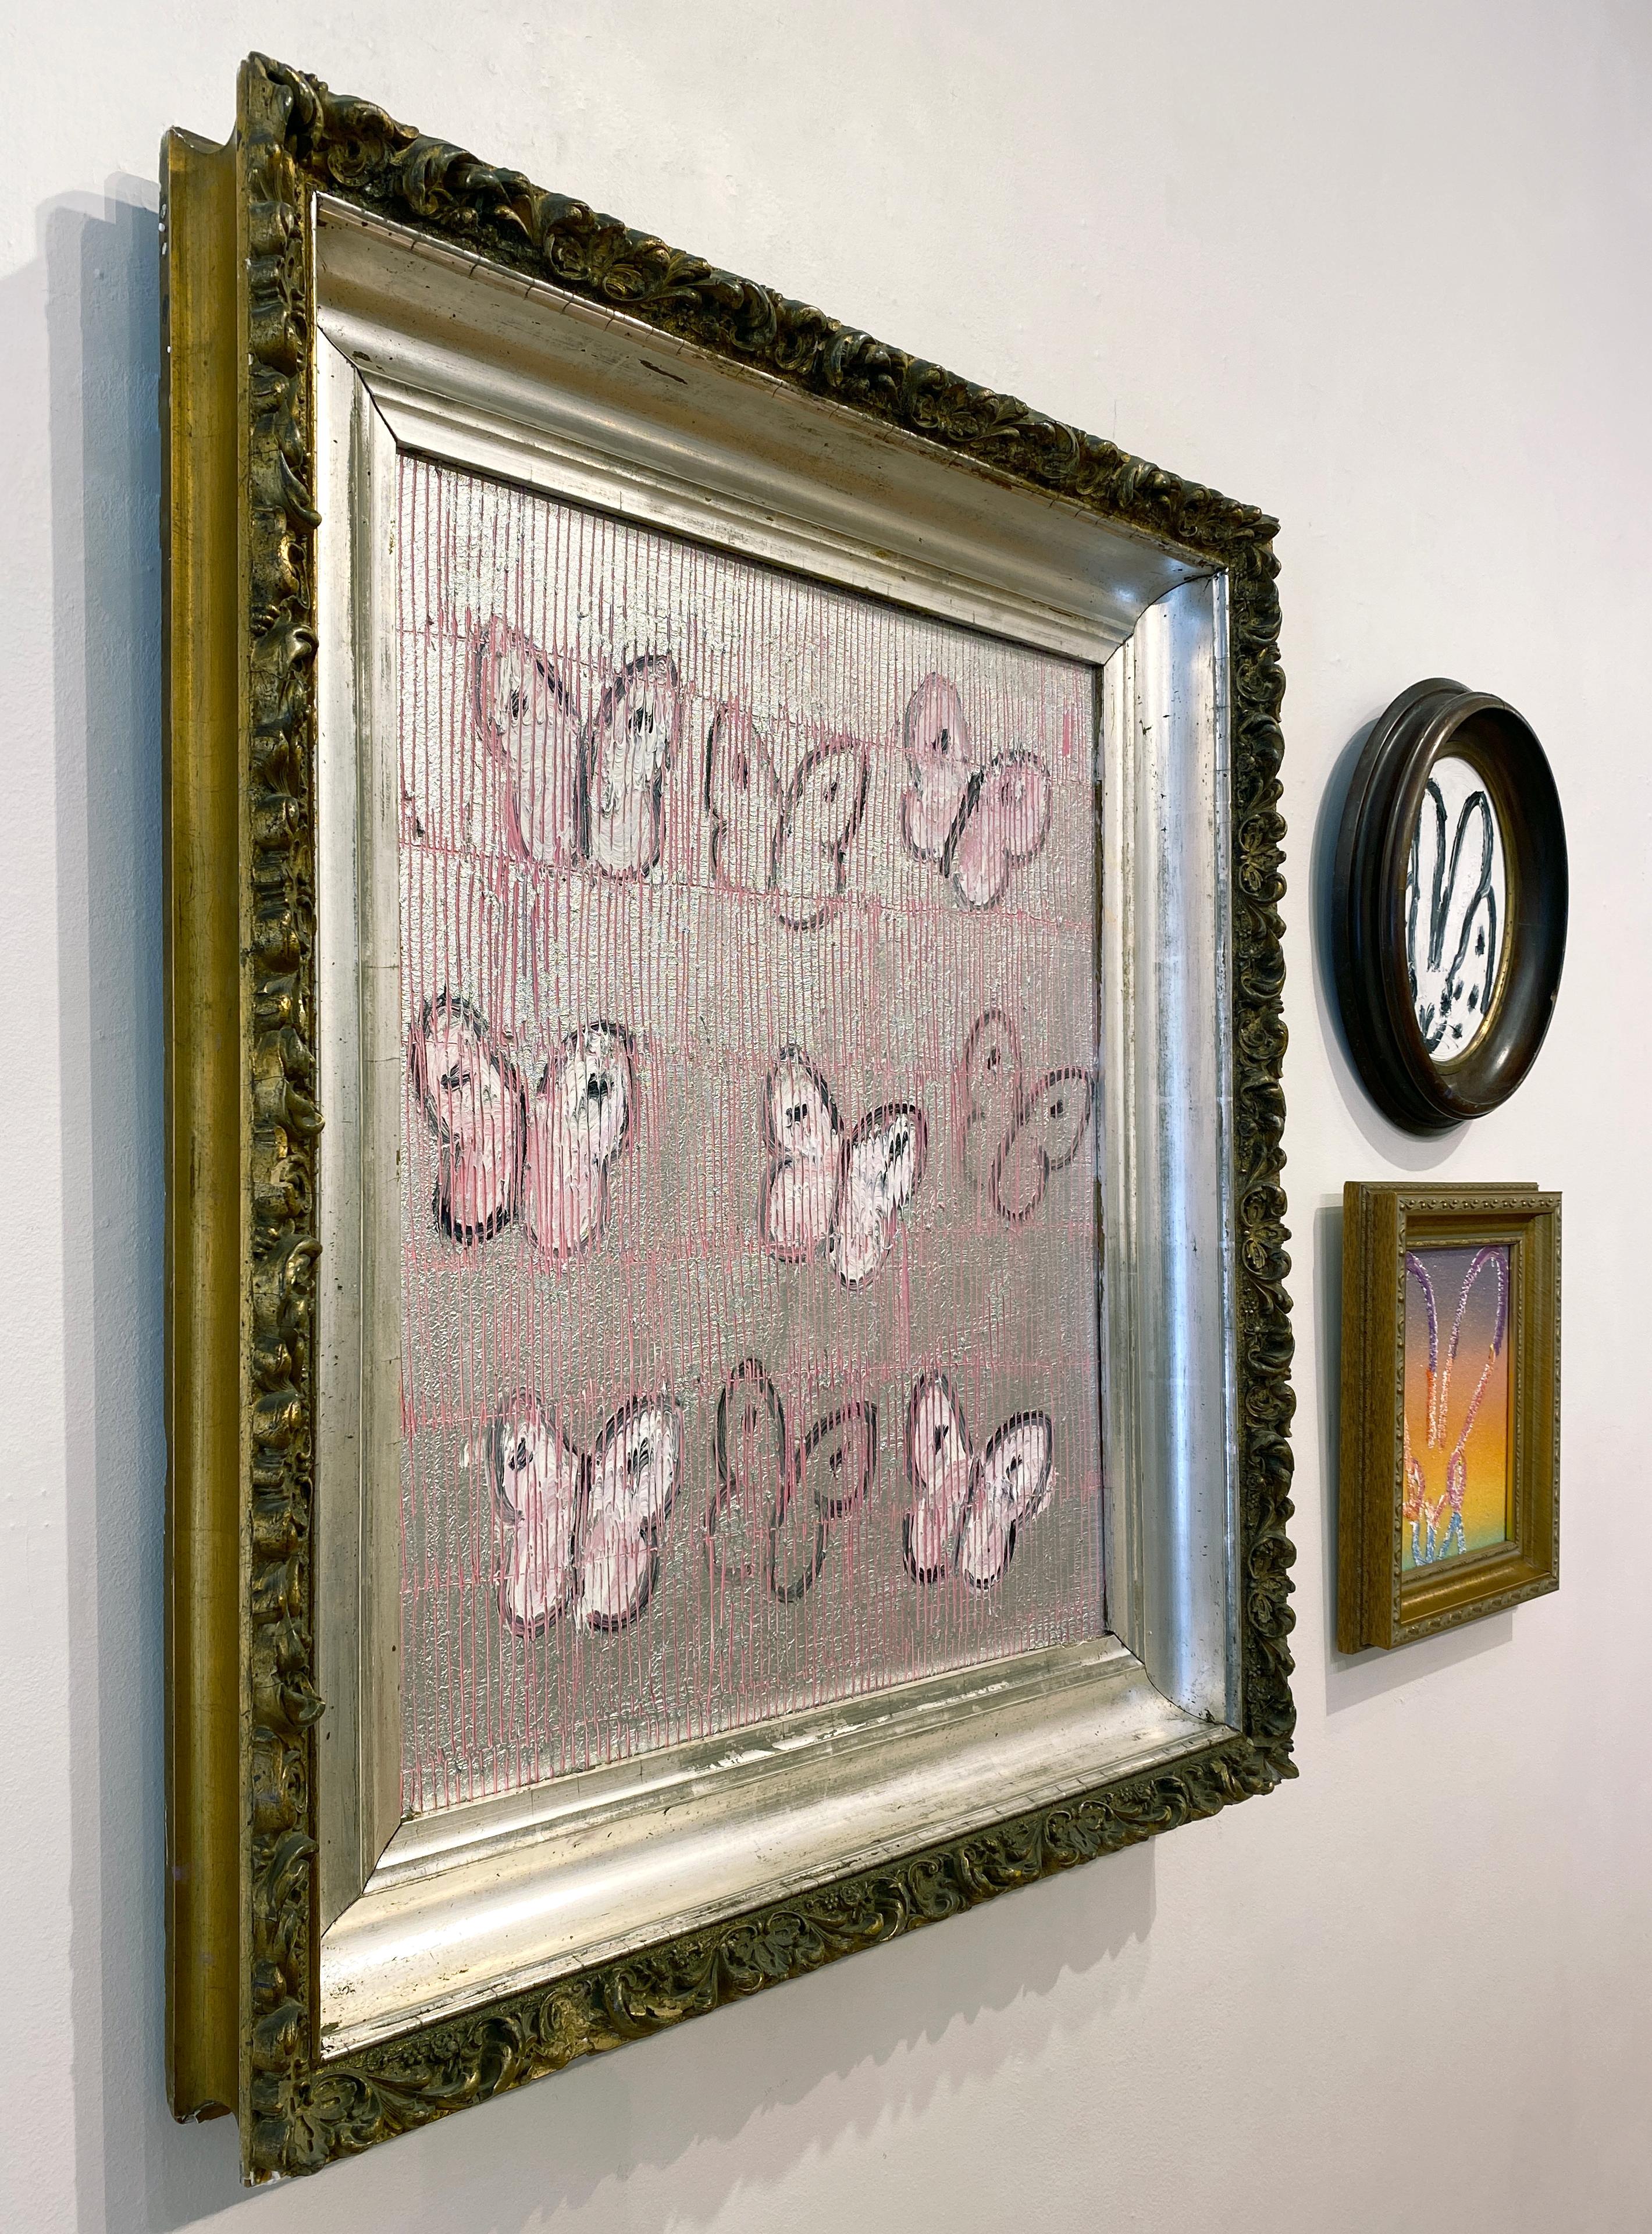 Artist:  Slonem, Hunt
Title:  Pink Butterfly
Series:  Butterflies
Date:  2020
Medium:  Oil on wood
Unframed Dimensions:  24